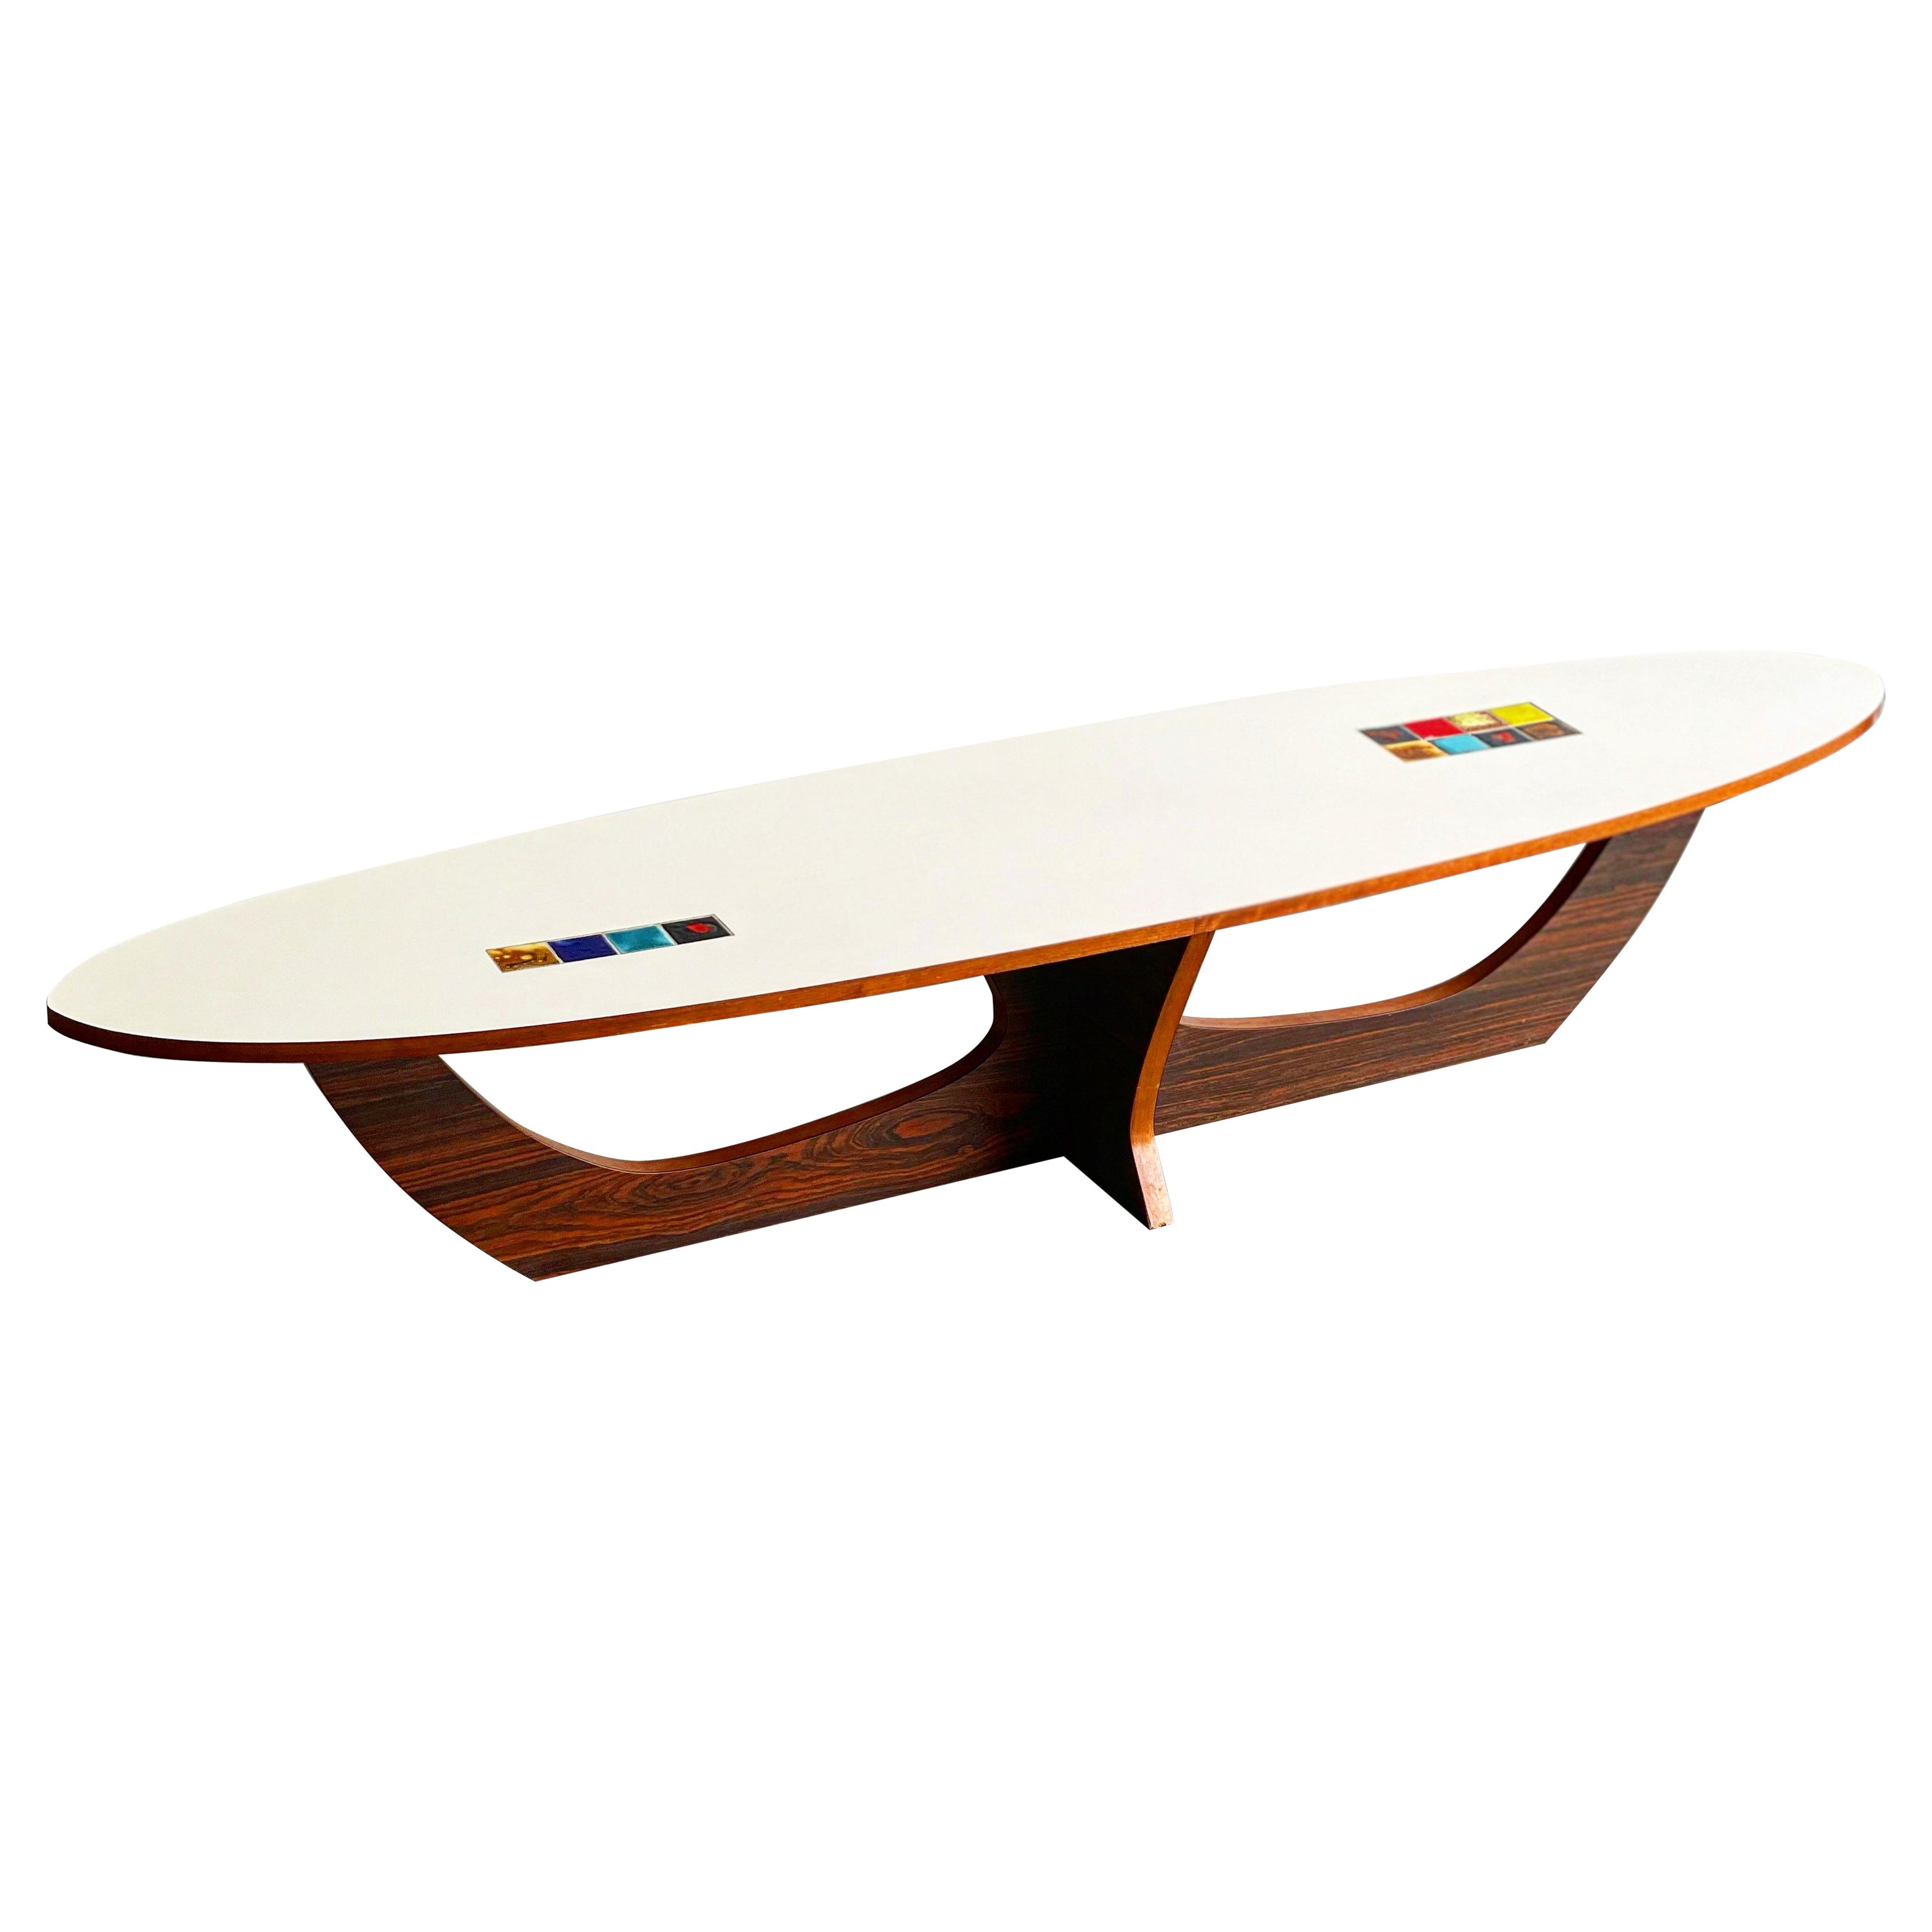 Midcentury Samson Berman Studio Craft Surfboard Style Coffee Table W/ Inset Tile